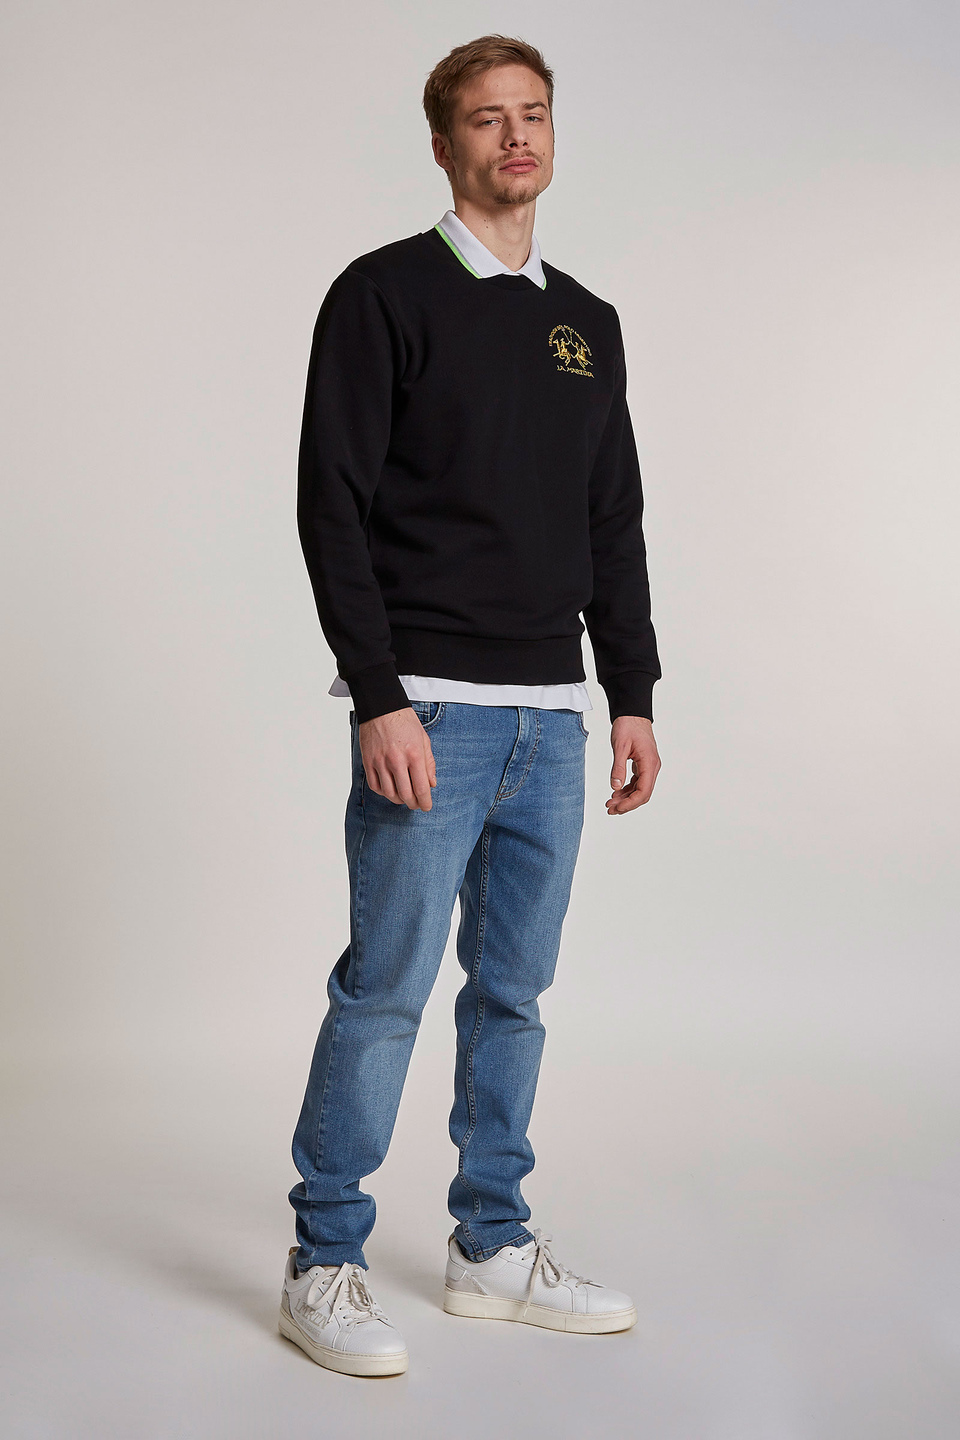 Men's short-sleeved regular-fit stretch cotton polo shirt | La Martina - Official Online Shop